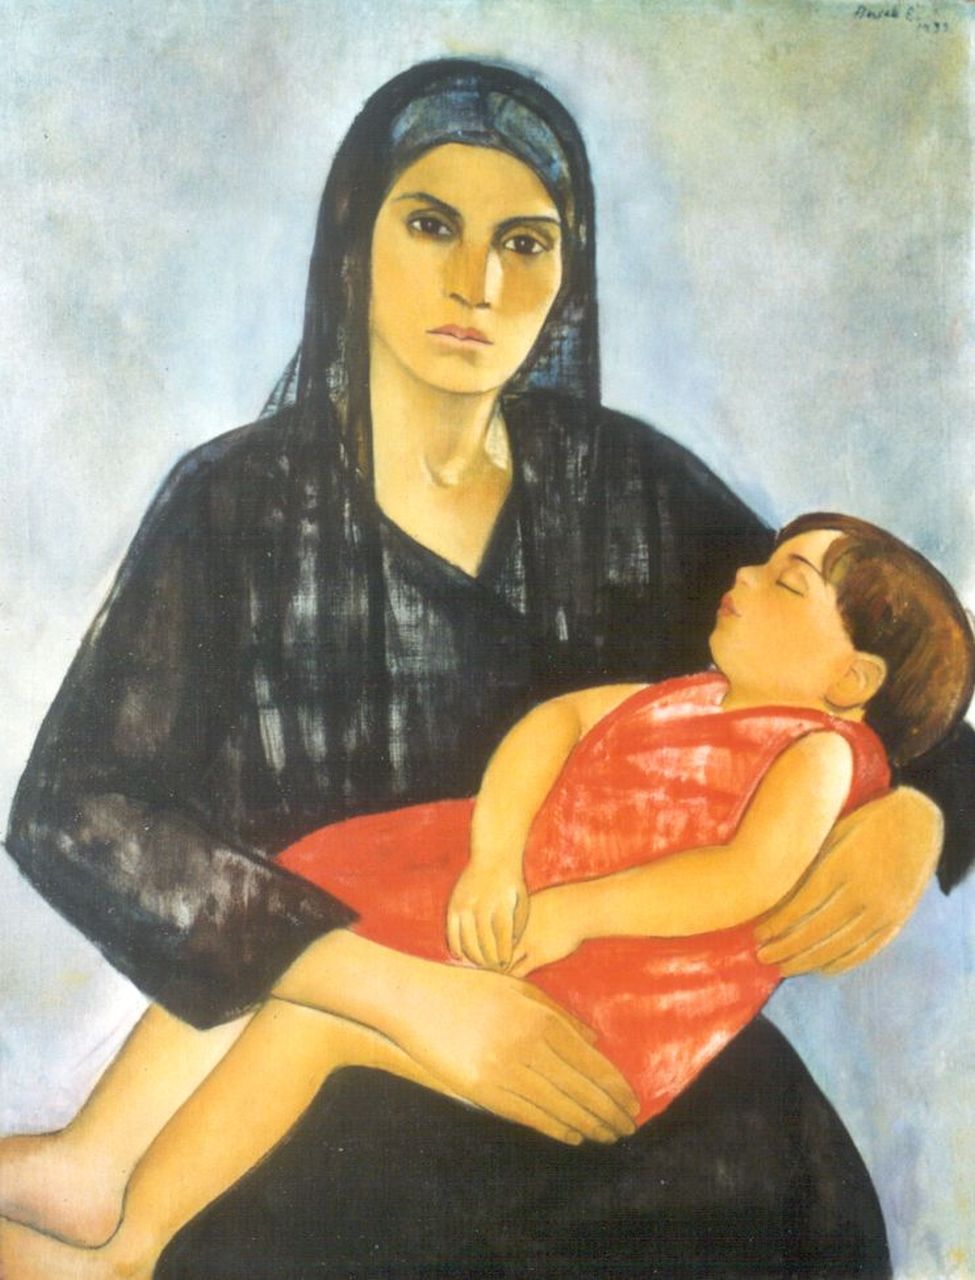 Basch E.  | Edith Basch, Mother with a sleeping child, Öl auf Leinwand 95,7 x 74,0 cm, signed u.r. und datiert 1933